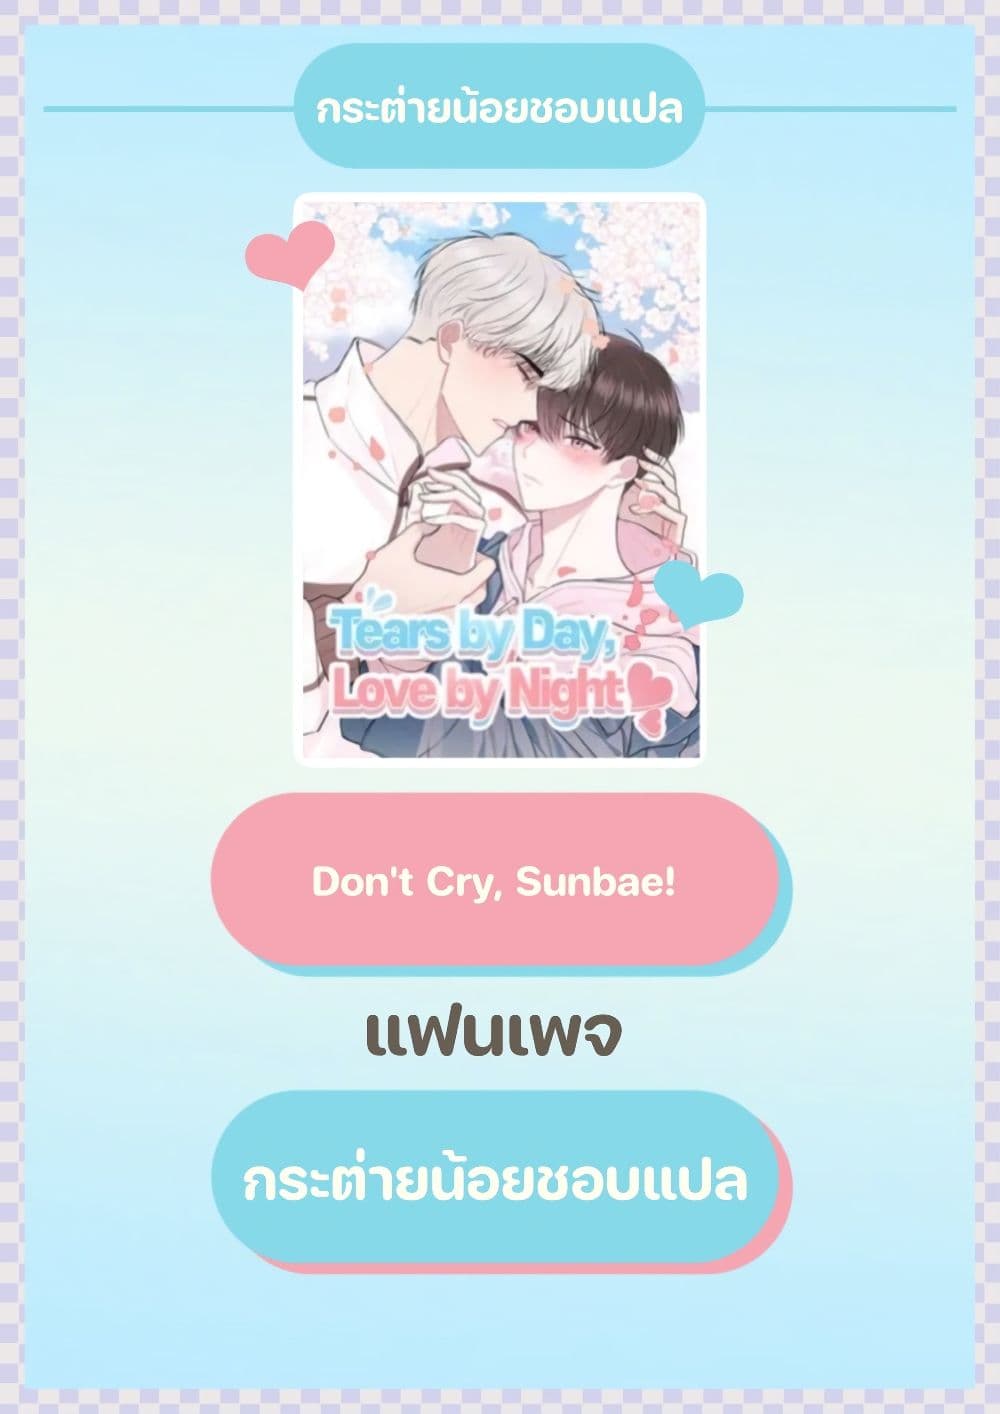 Donโ€t Cry, Sunbae! 7 (1)